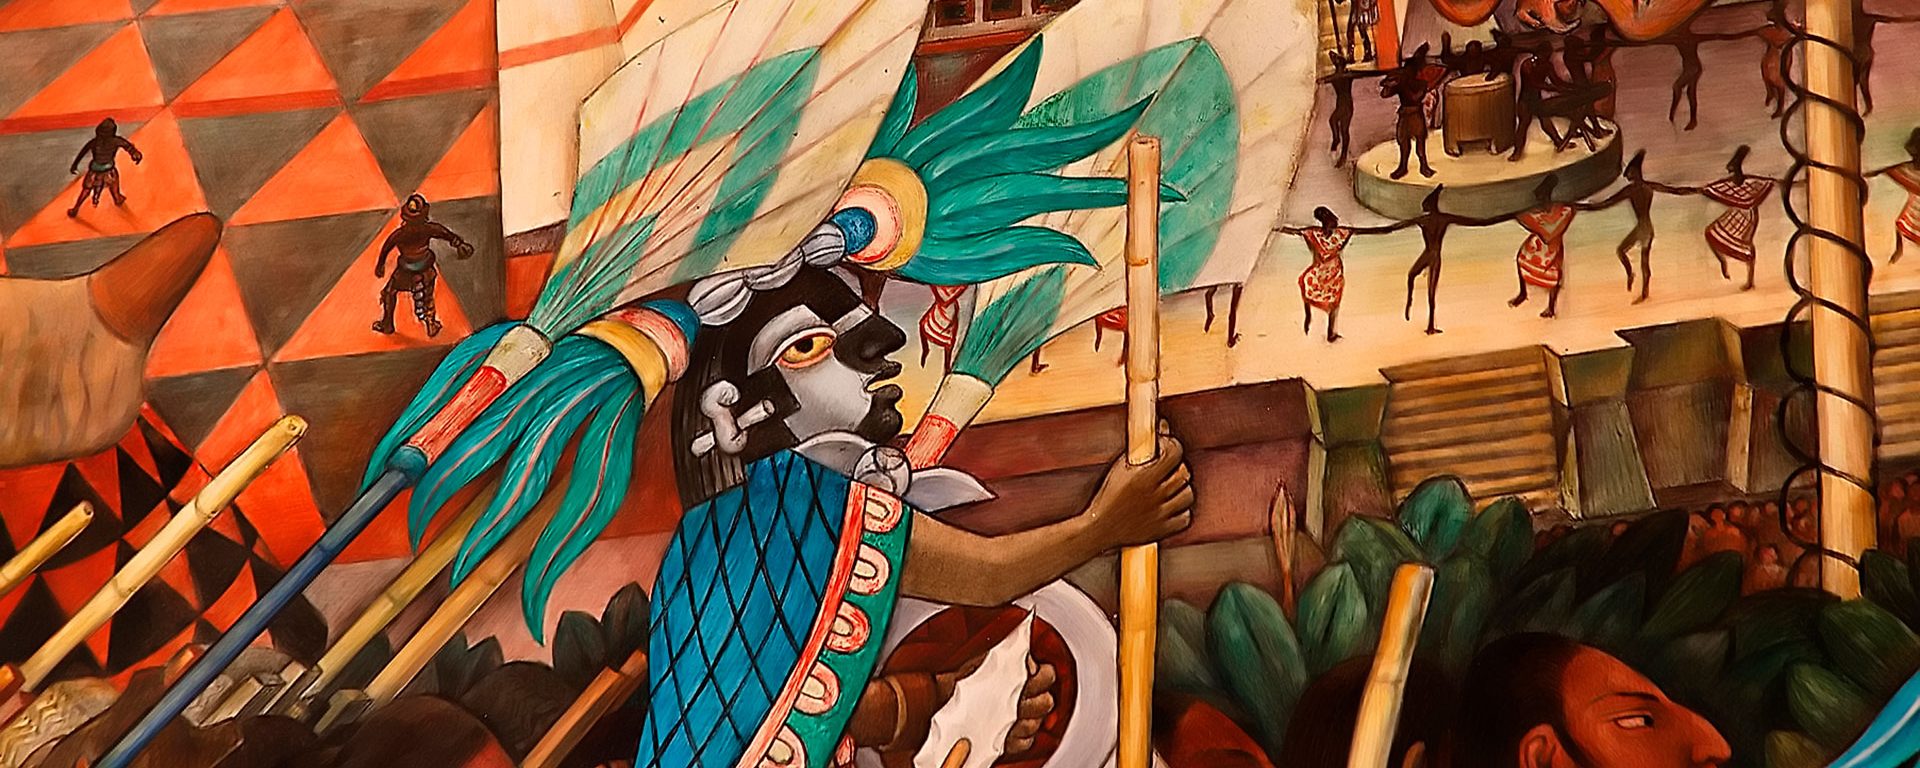 Detail of the Diego Rivera mural, La Civilizacion Totonaca, at the National Palace, Mexico City